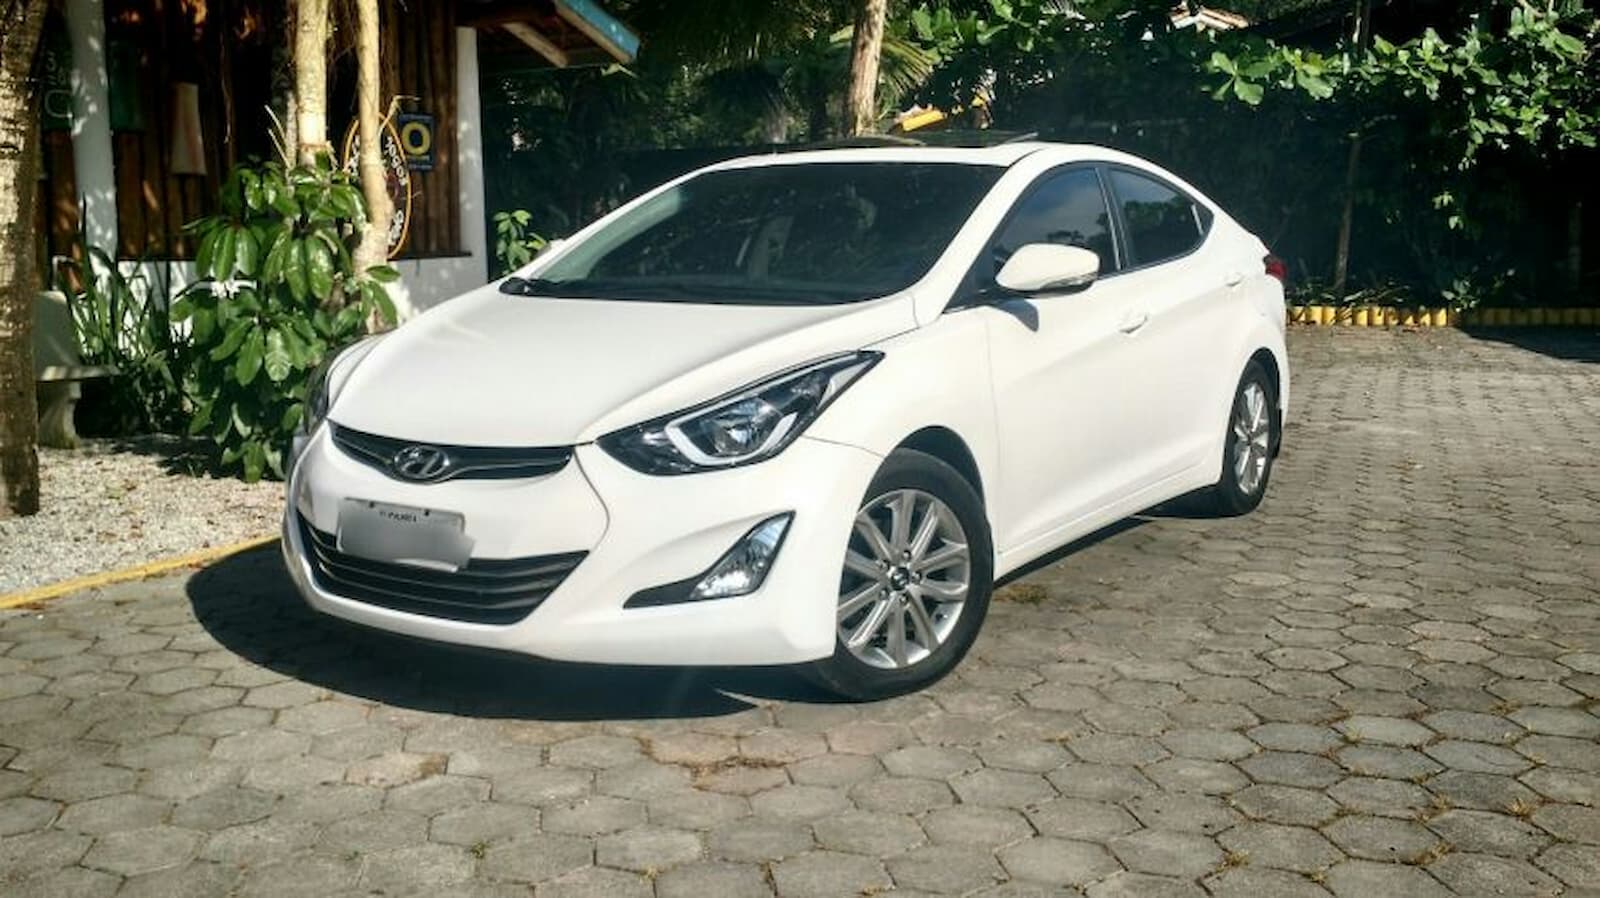 Hyundai Elantra GLS 2014